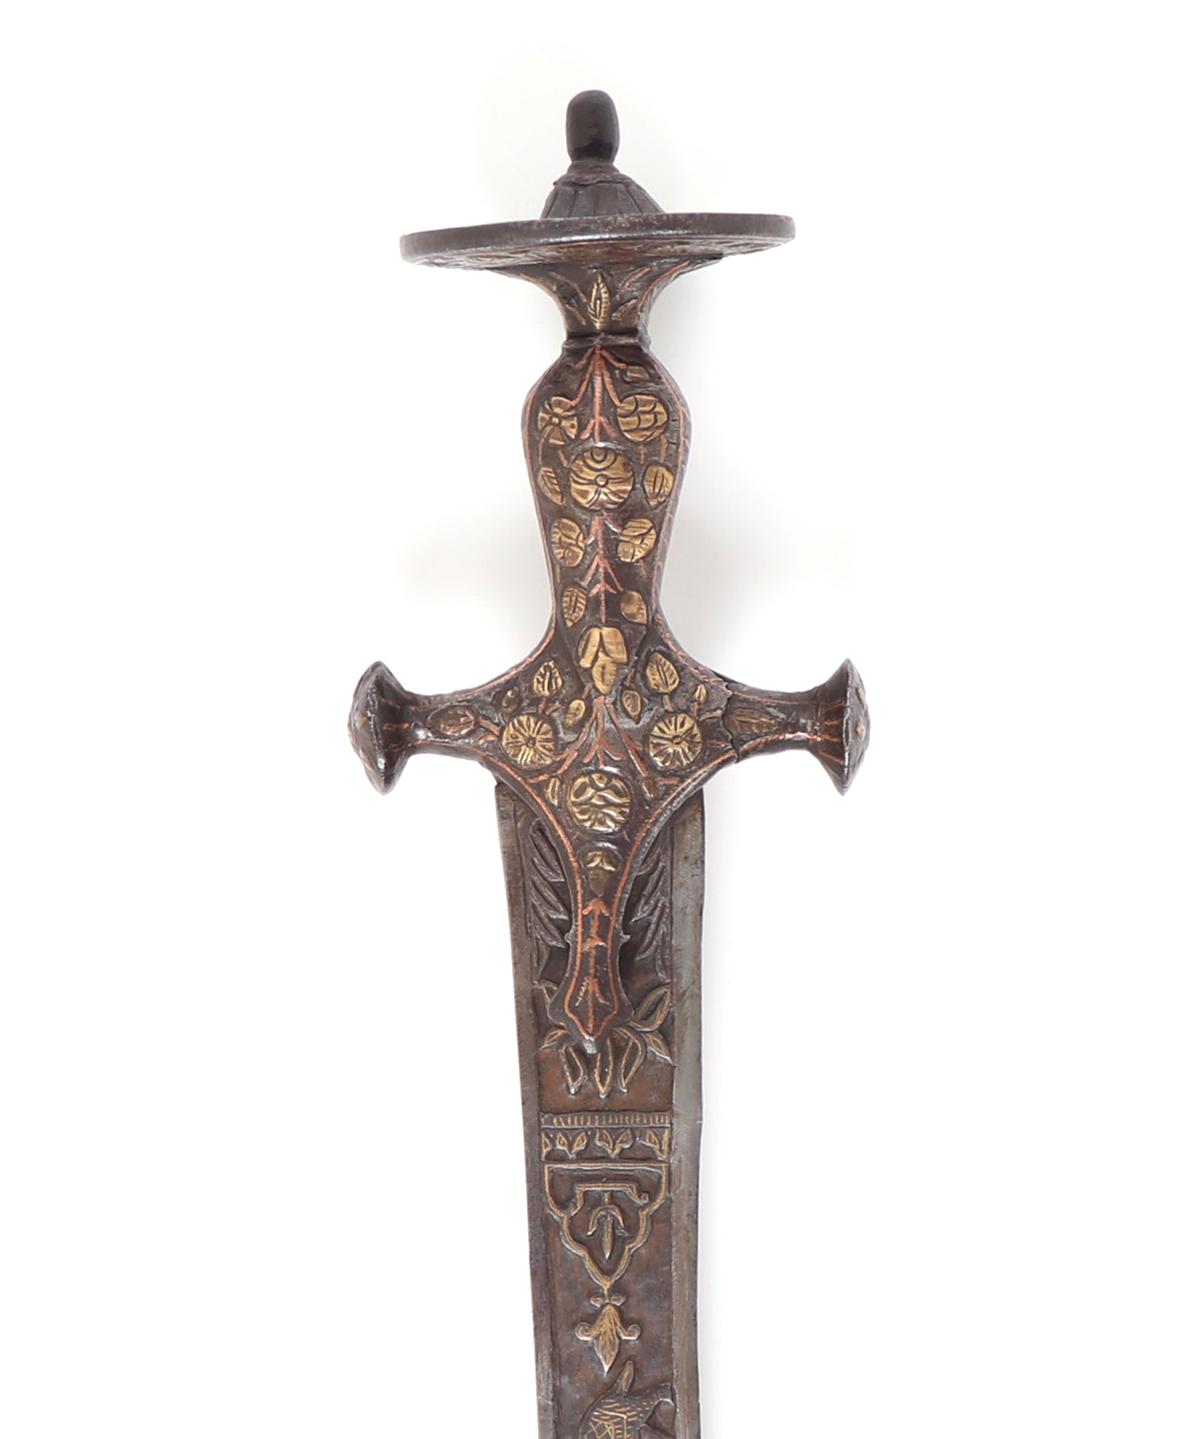 'The Hunt' Chiseled Tulwar Sword, 18th century